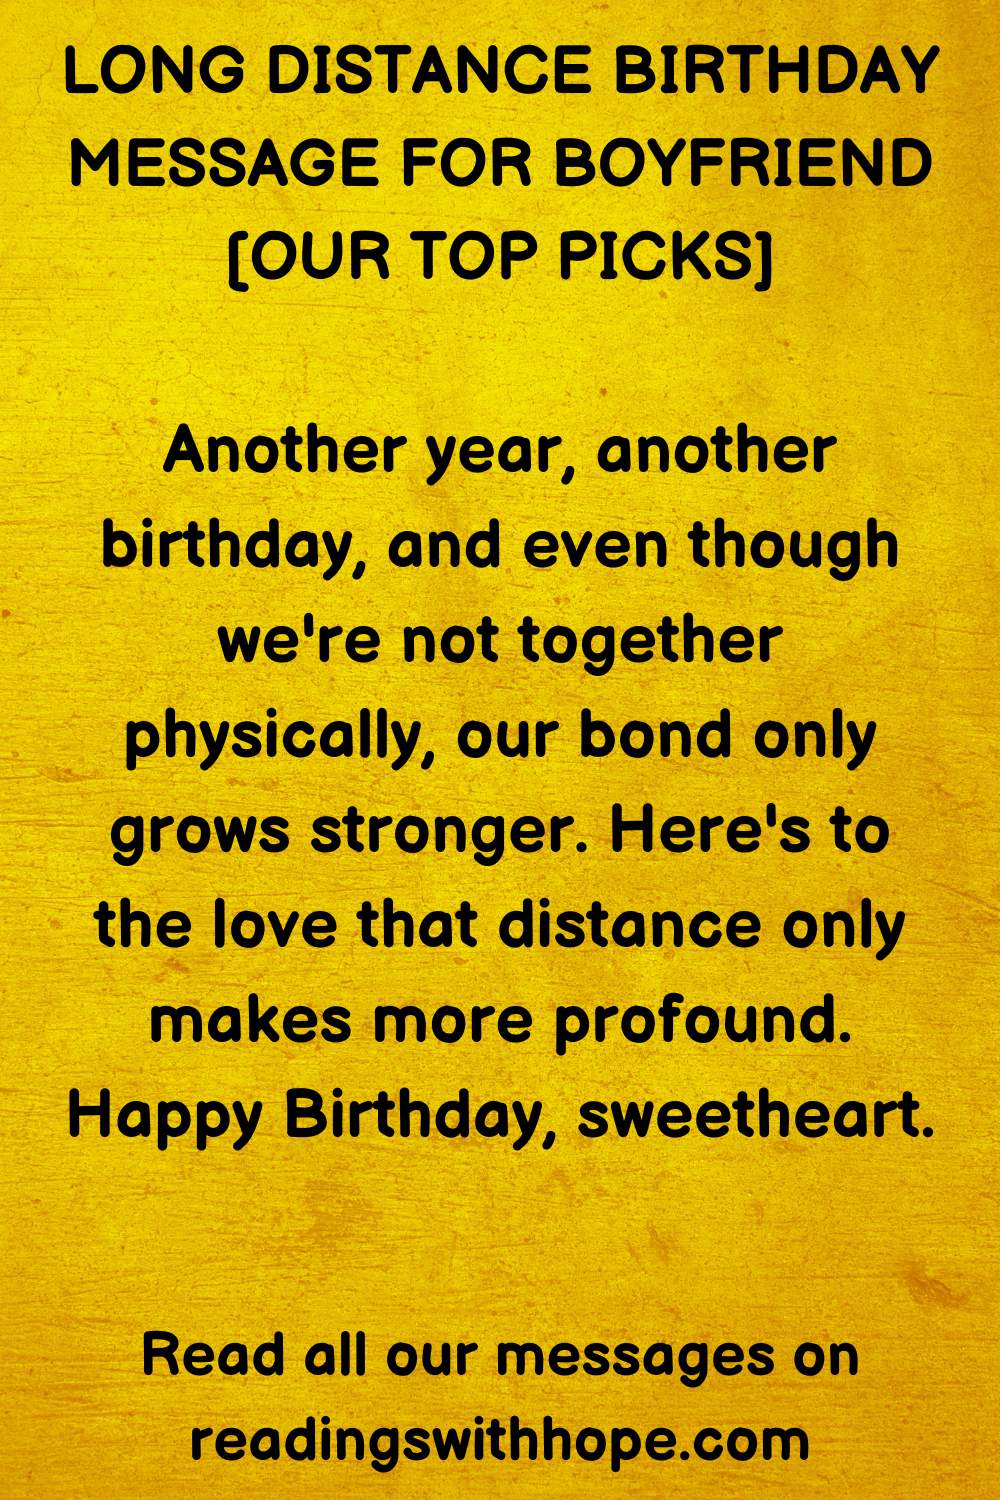 Long Distance Birthday Message for Boyfriend